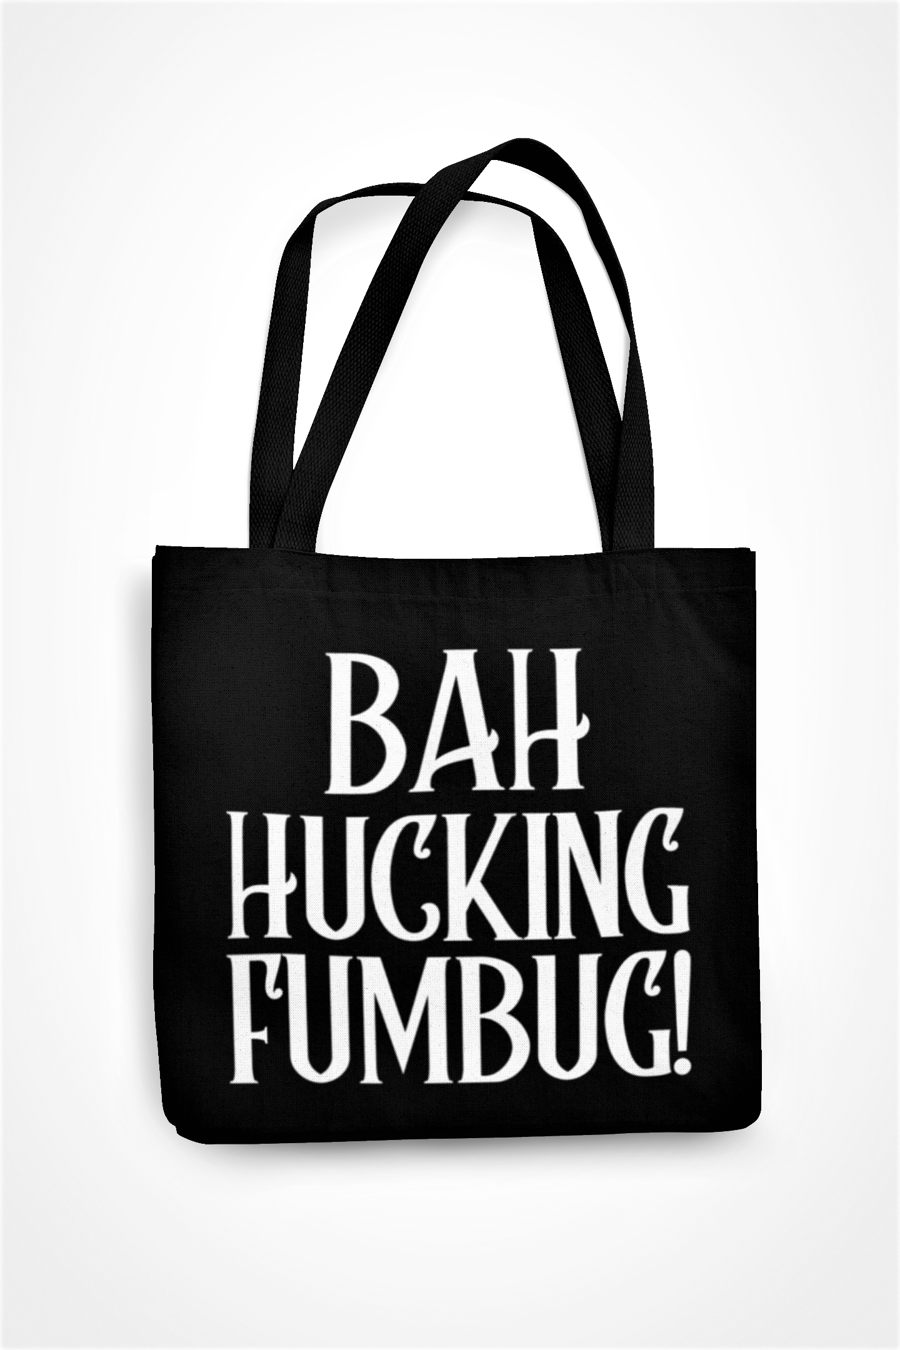 Bah Hucking Fumbug  - Novelty Funny Christmas Tote Bag 